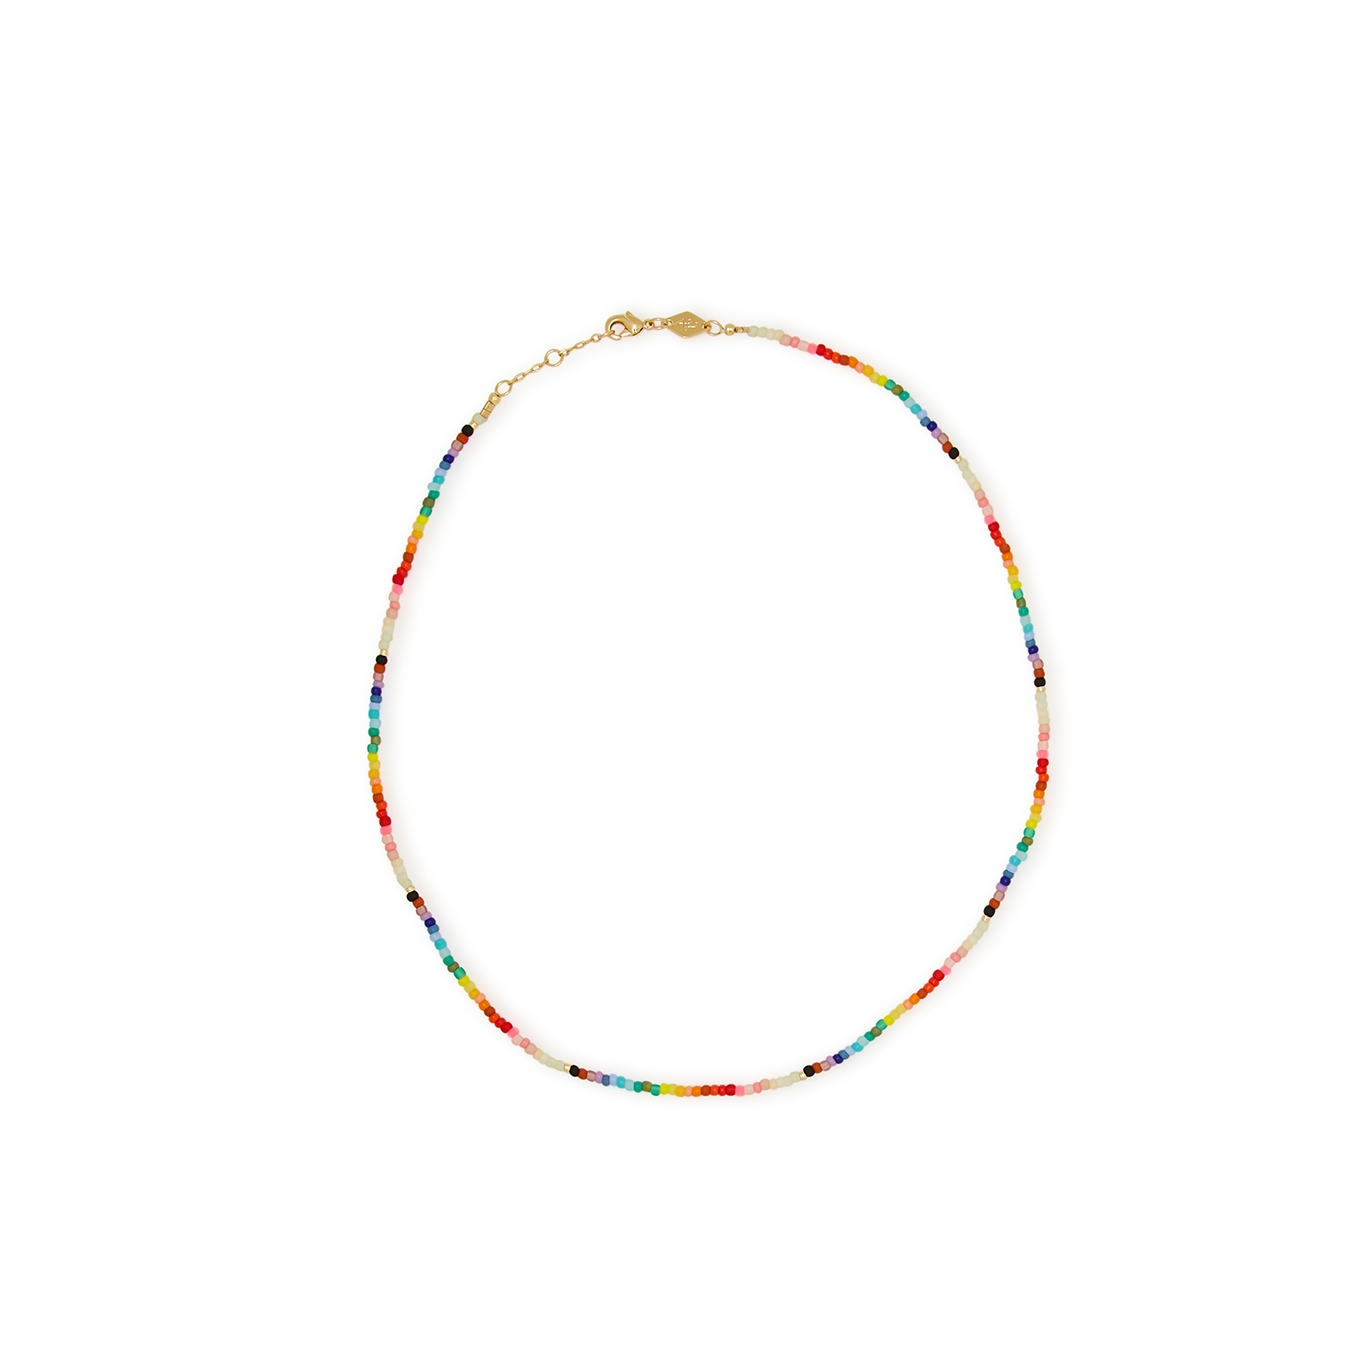 Anni LU Nuanua 18kt Gold-plated Beaded Necklace - Multicoloured - One Size